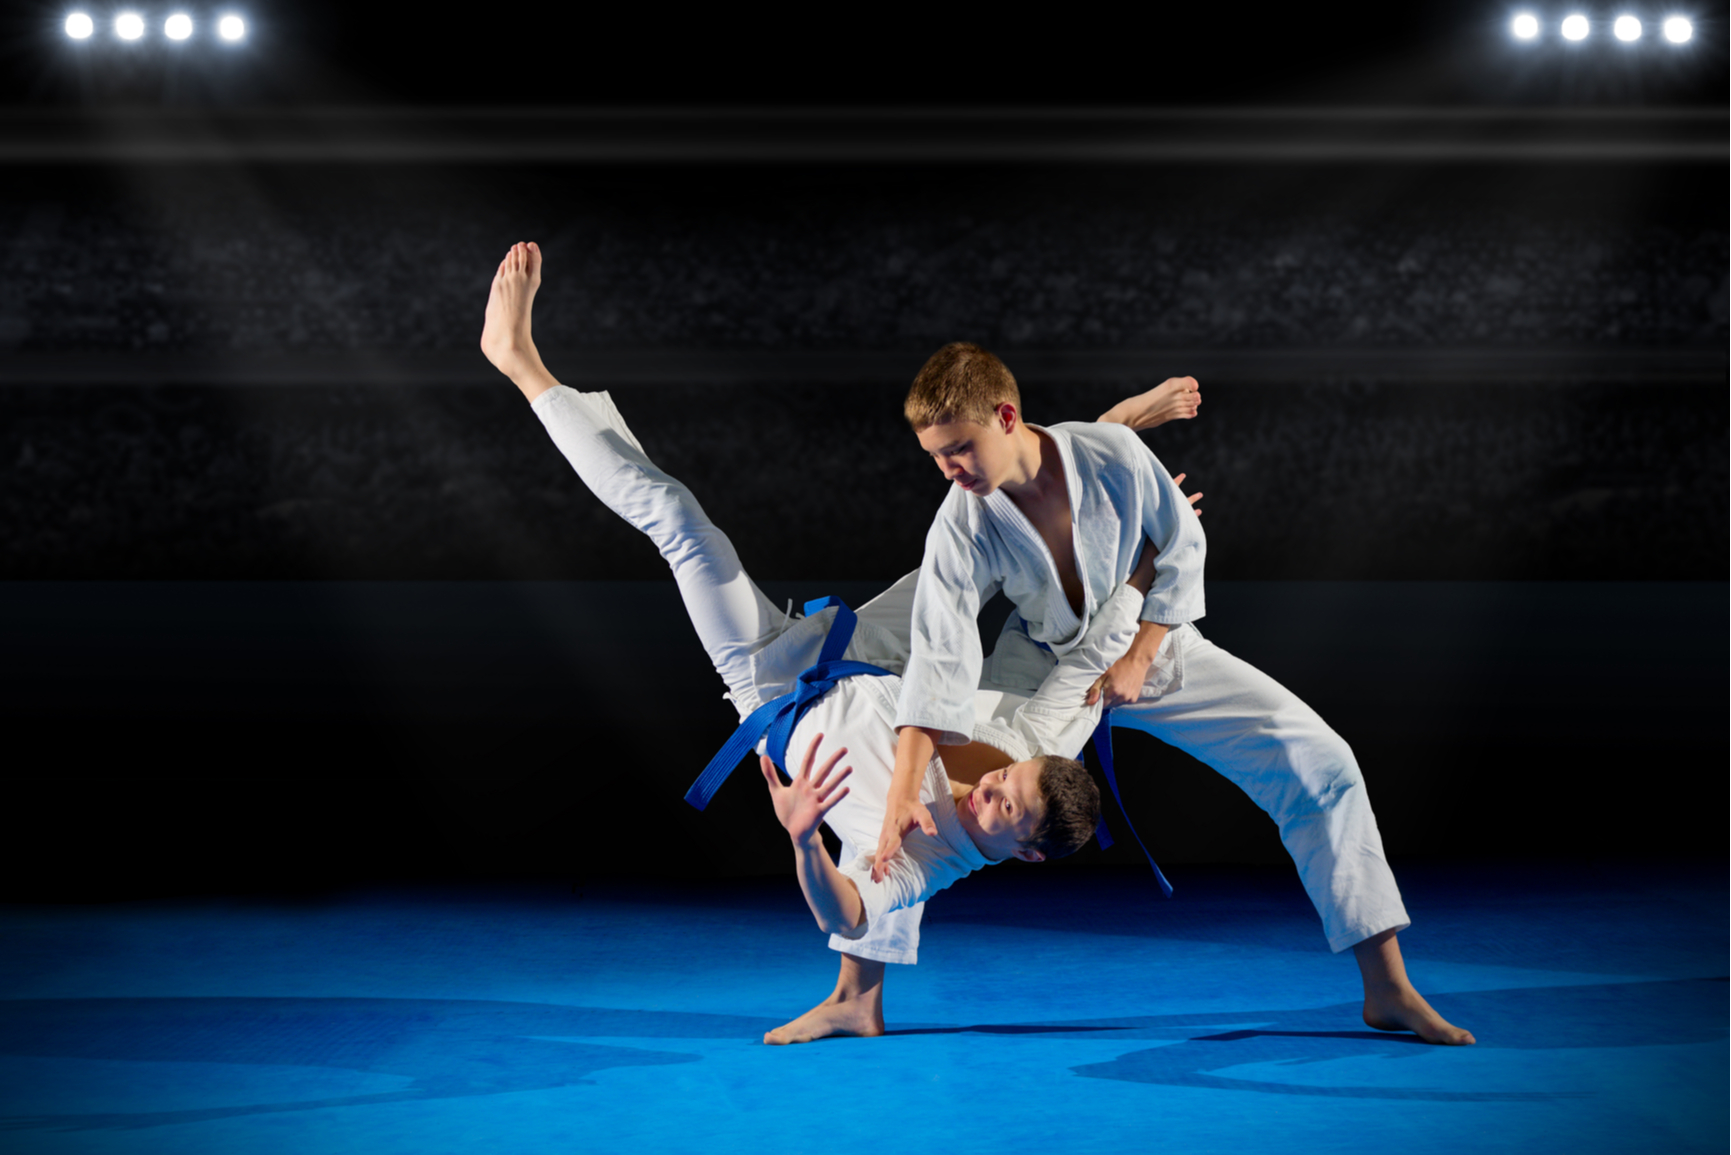 judo classes near me - judo lessons